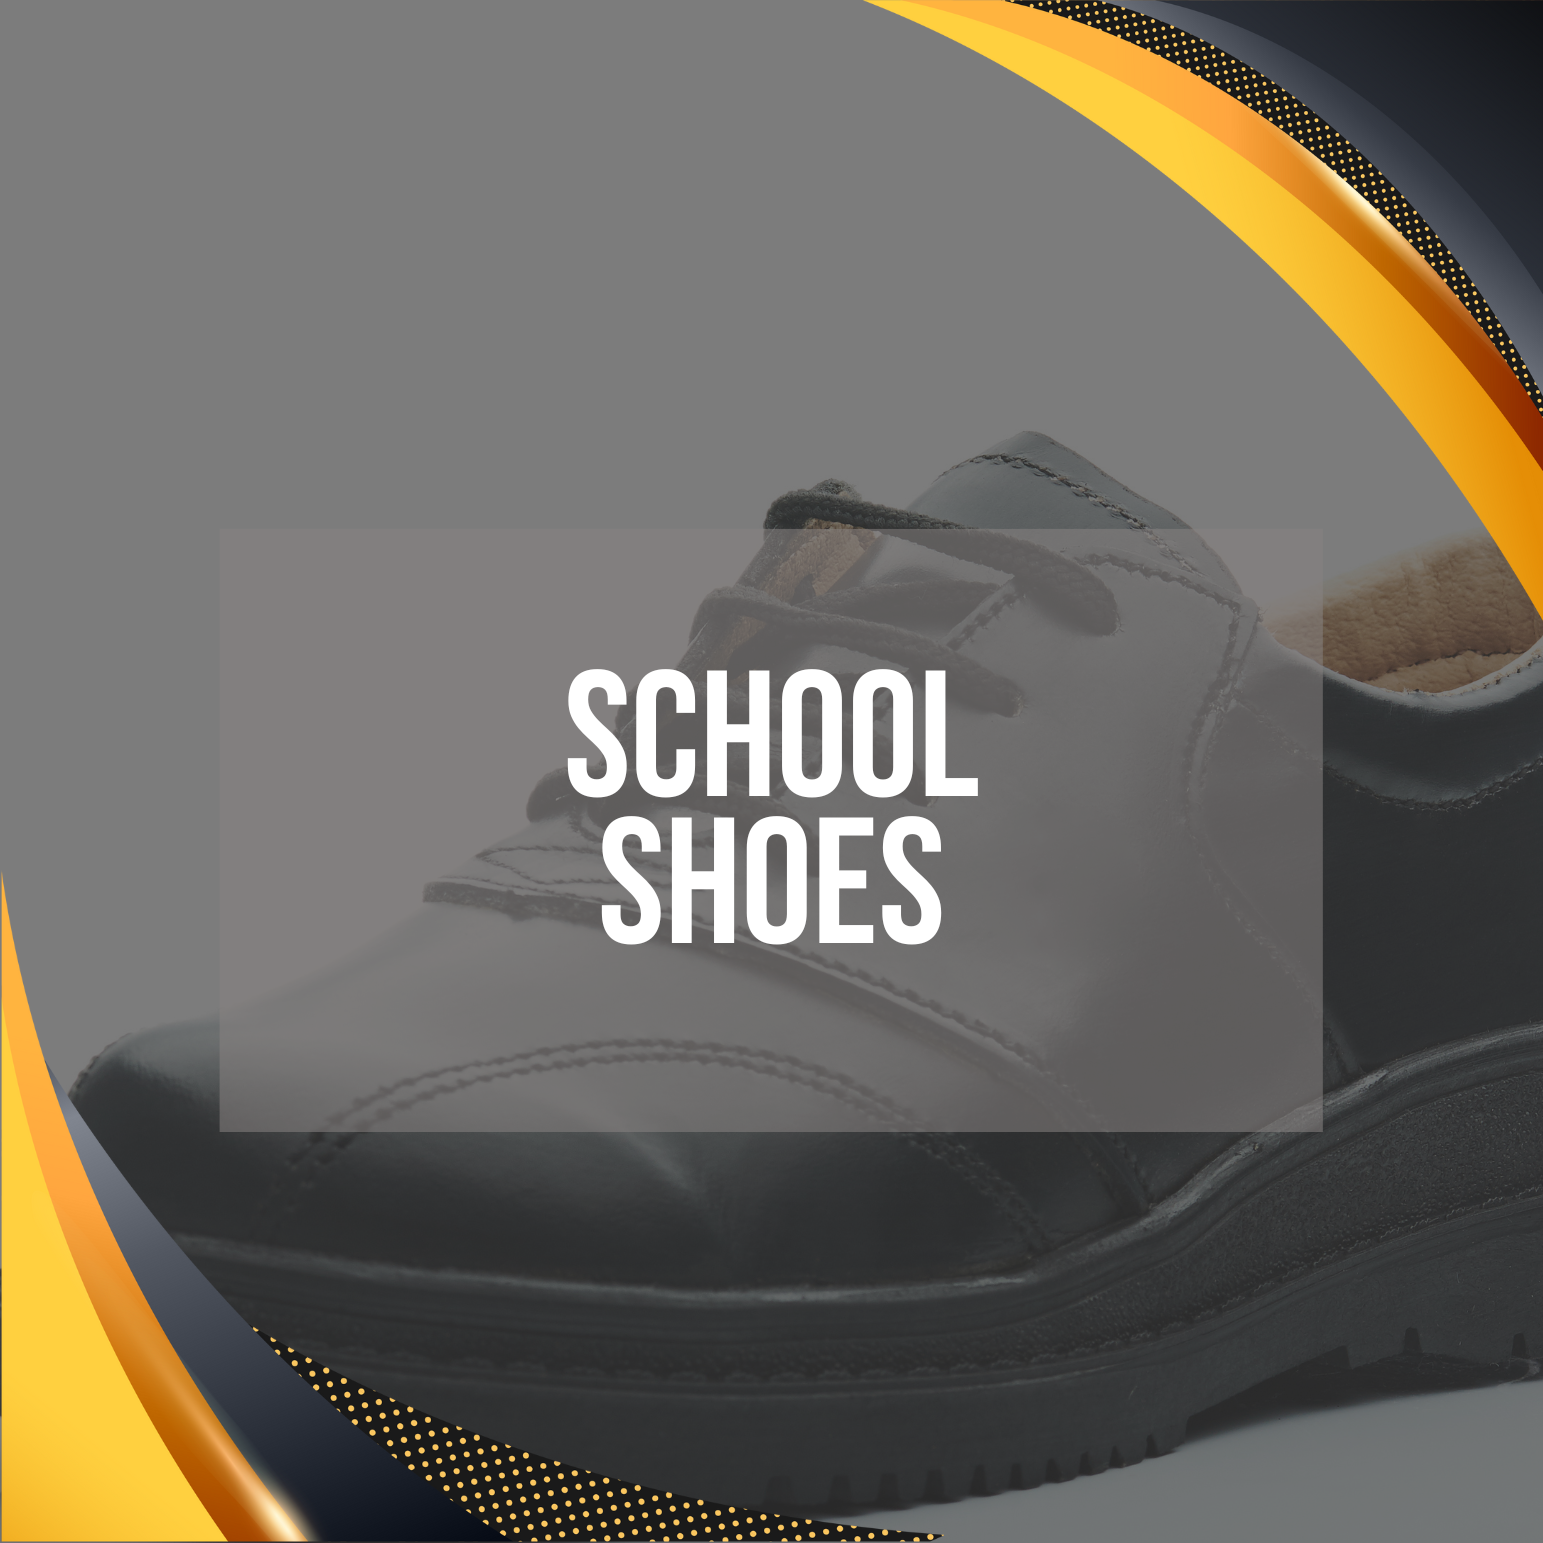 15% off School Shoes!